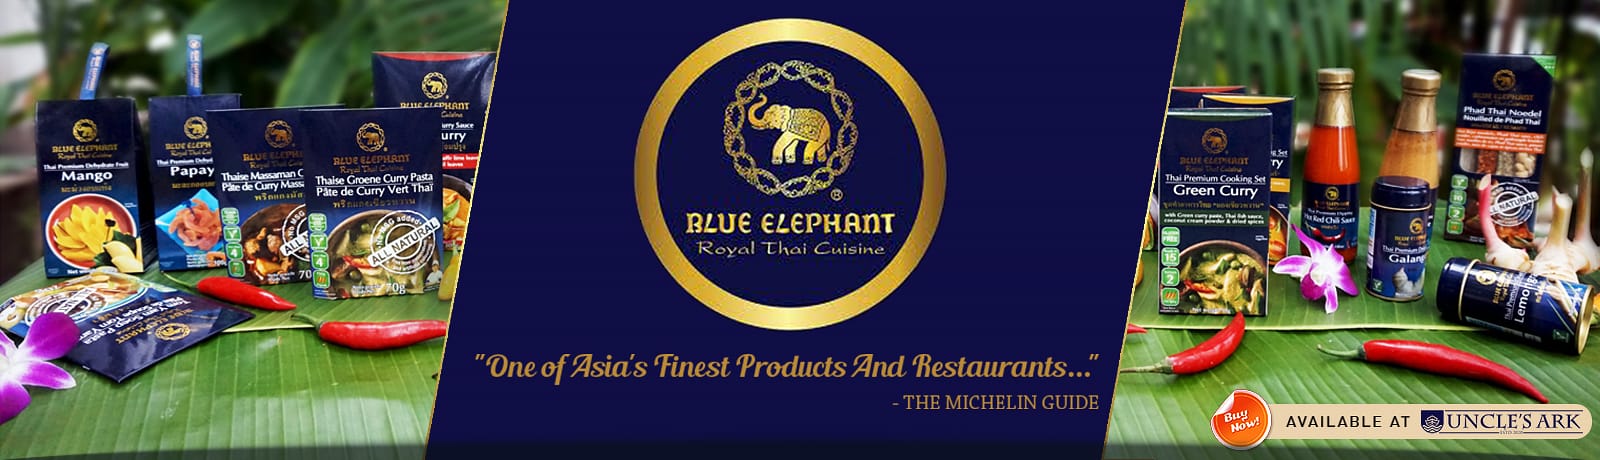 Blue Elephant Products